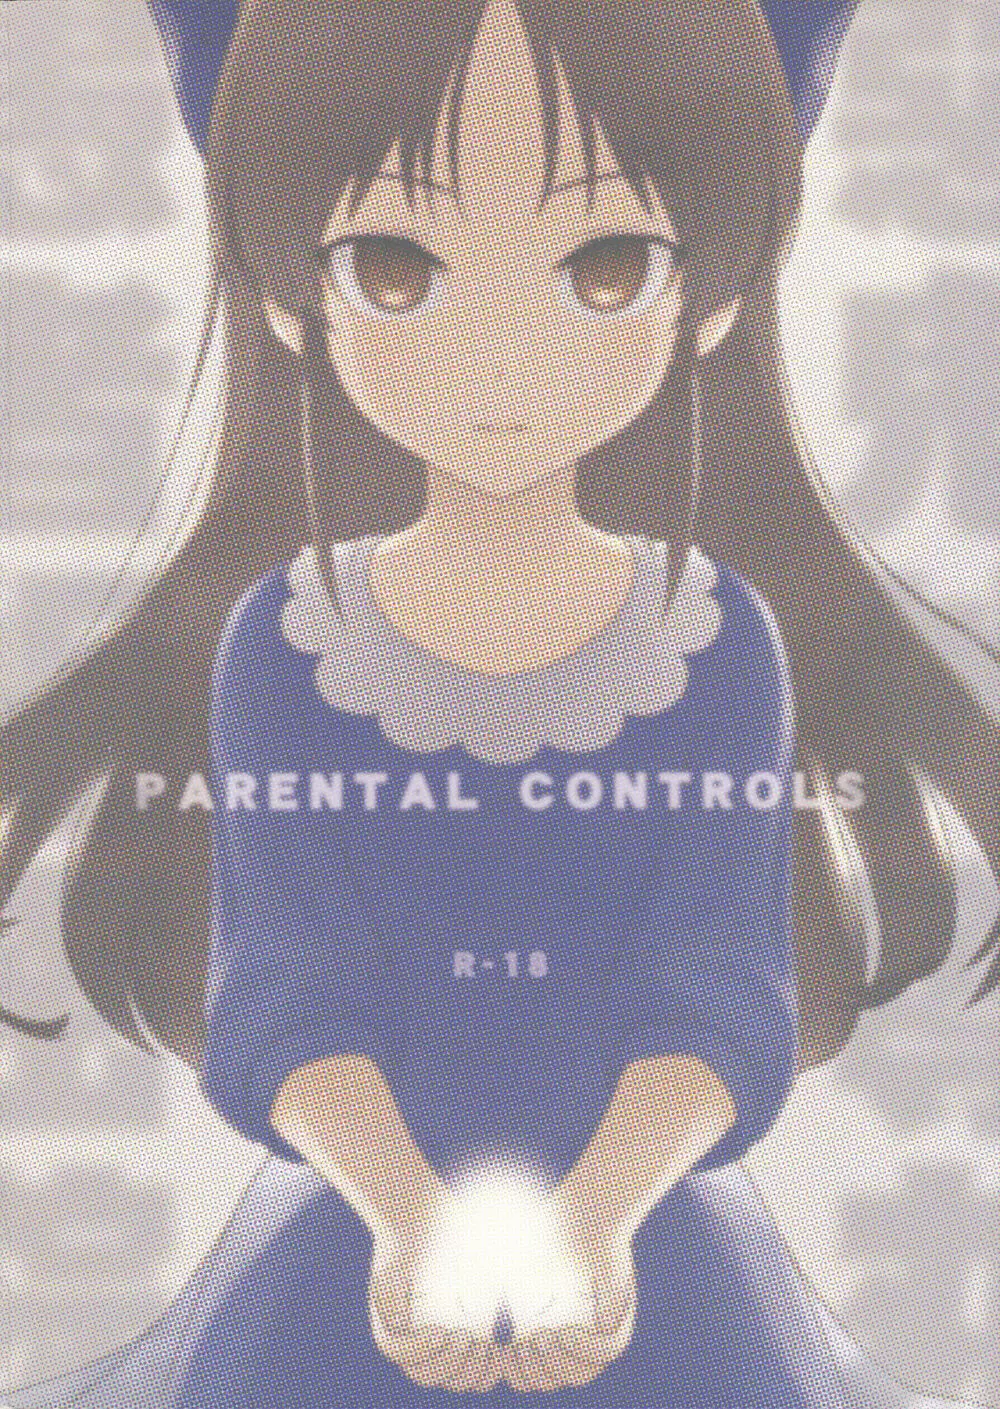 PARENTAL CONTROLS 34ページ